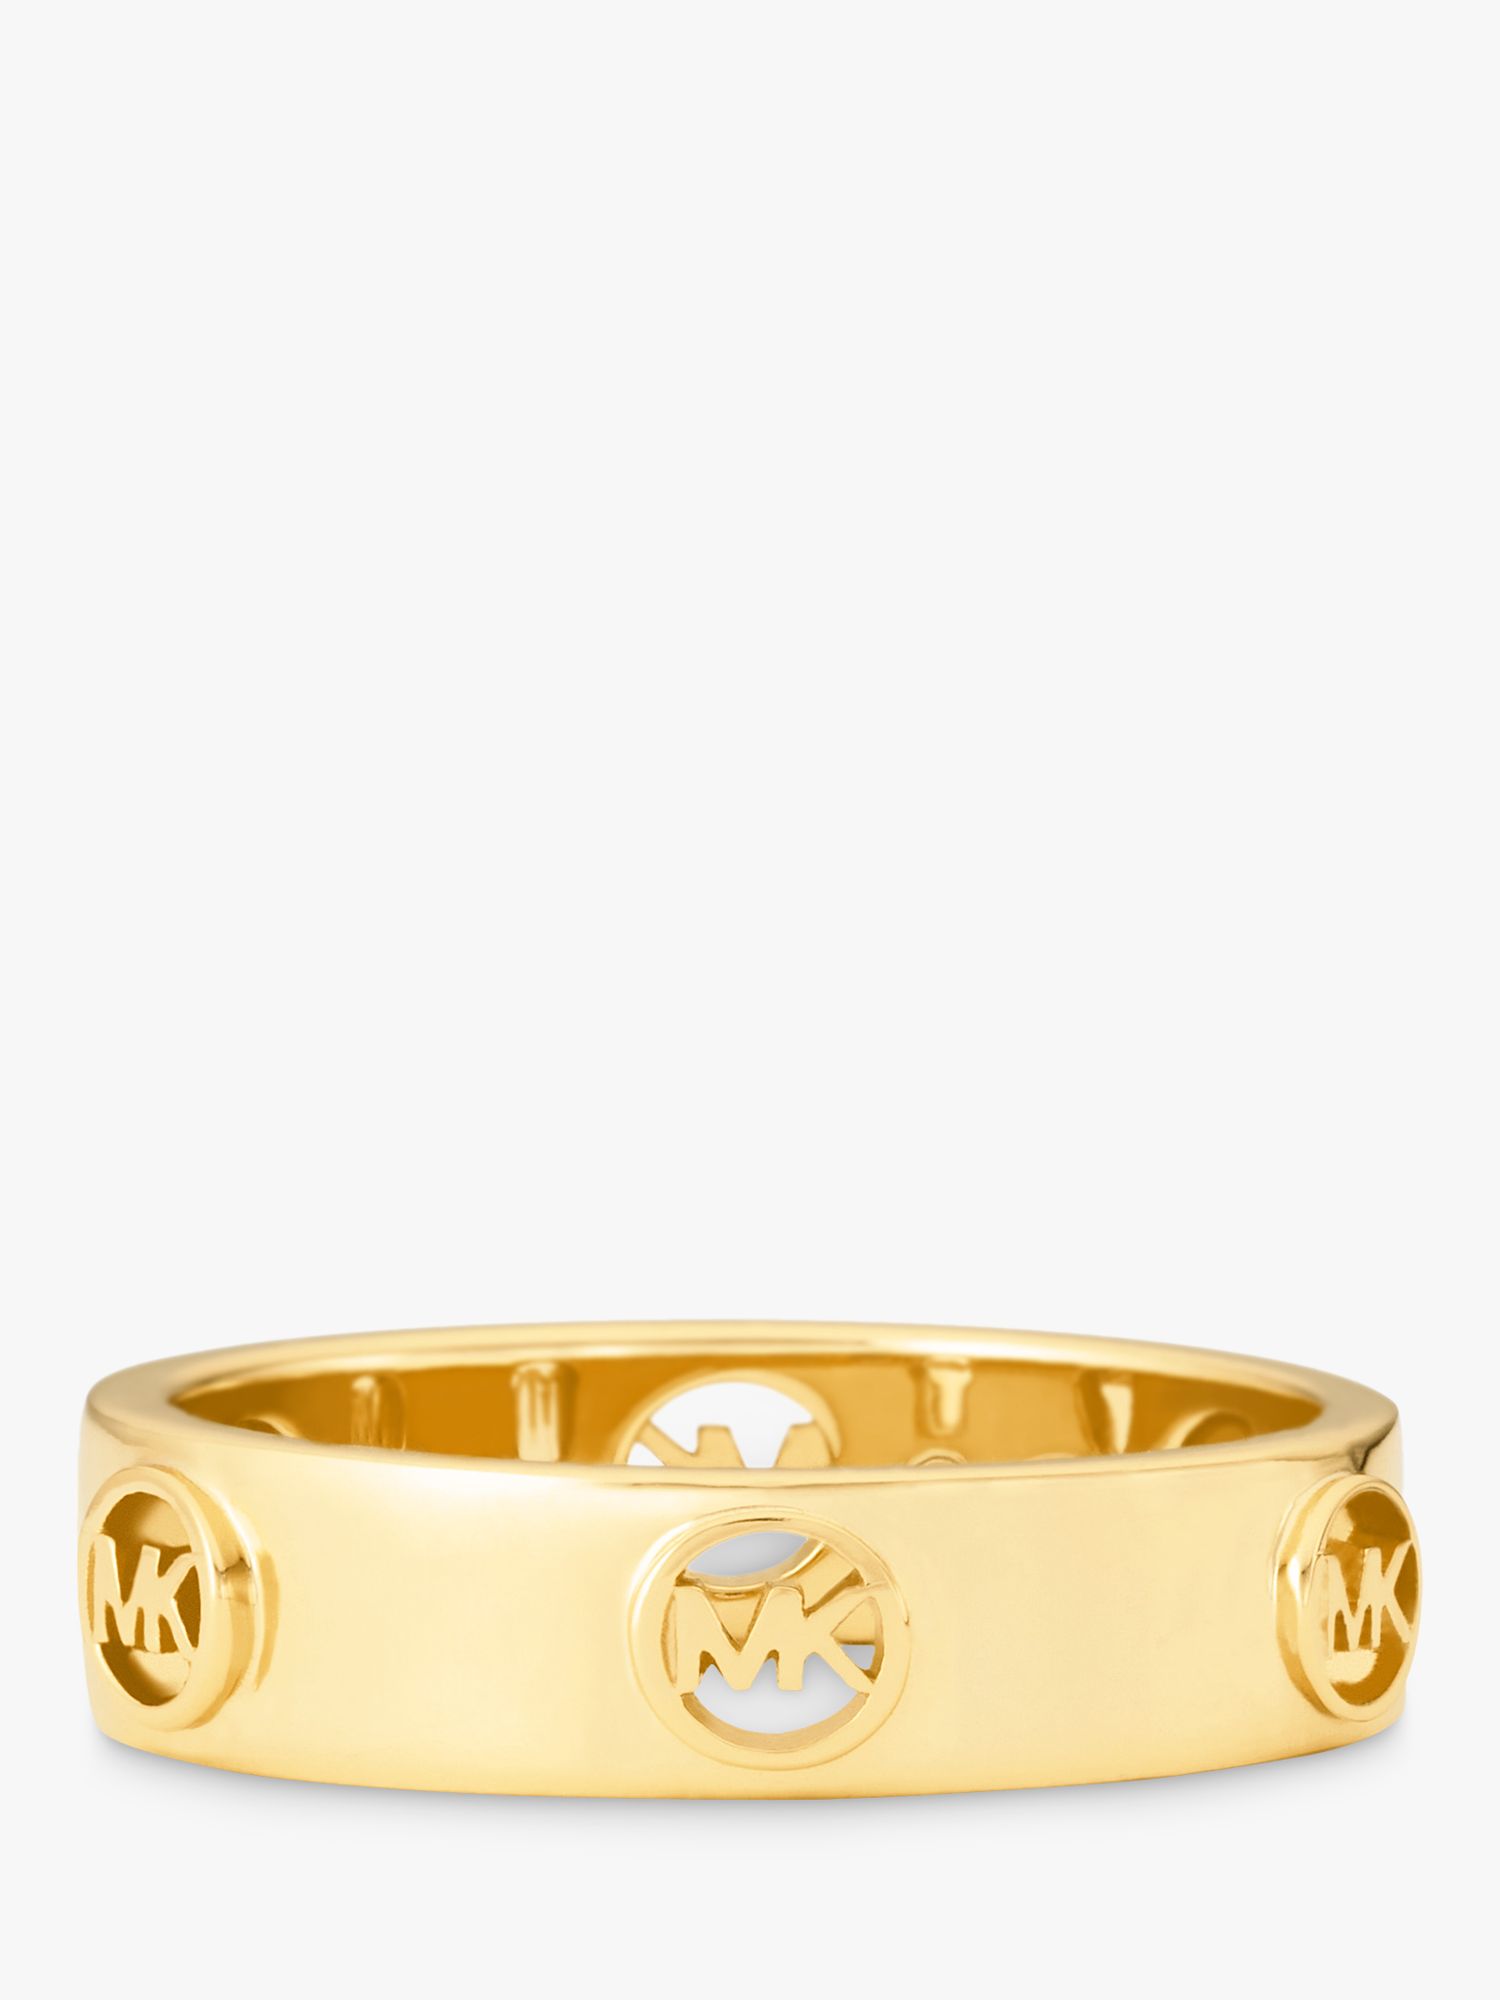 Michael Kors 14ct Gold Plated MK Logo Band Ring at John Lewis & Partners